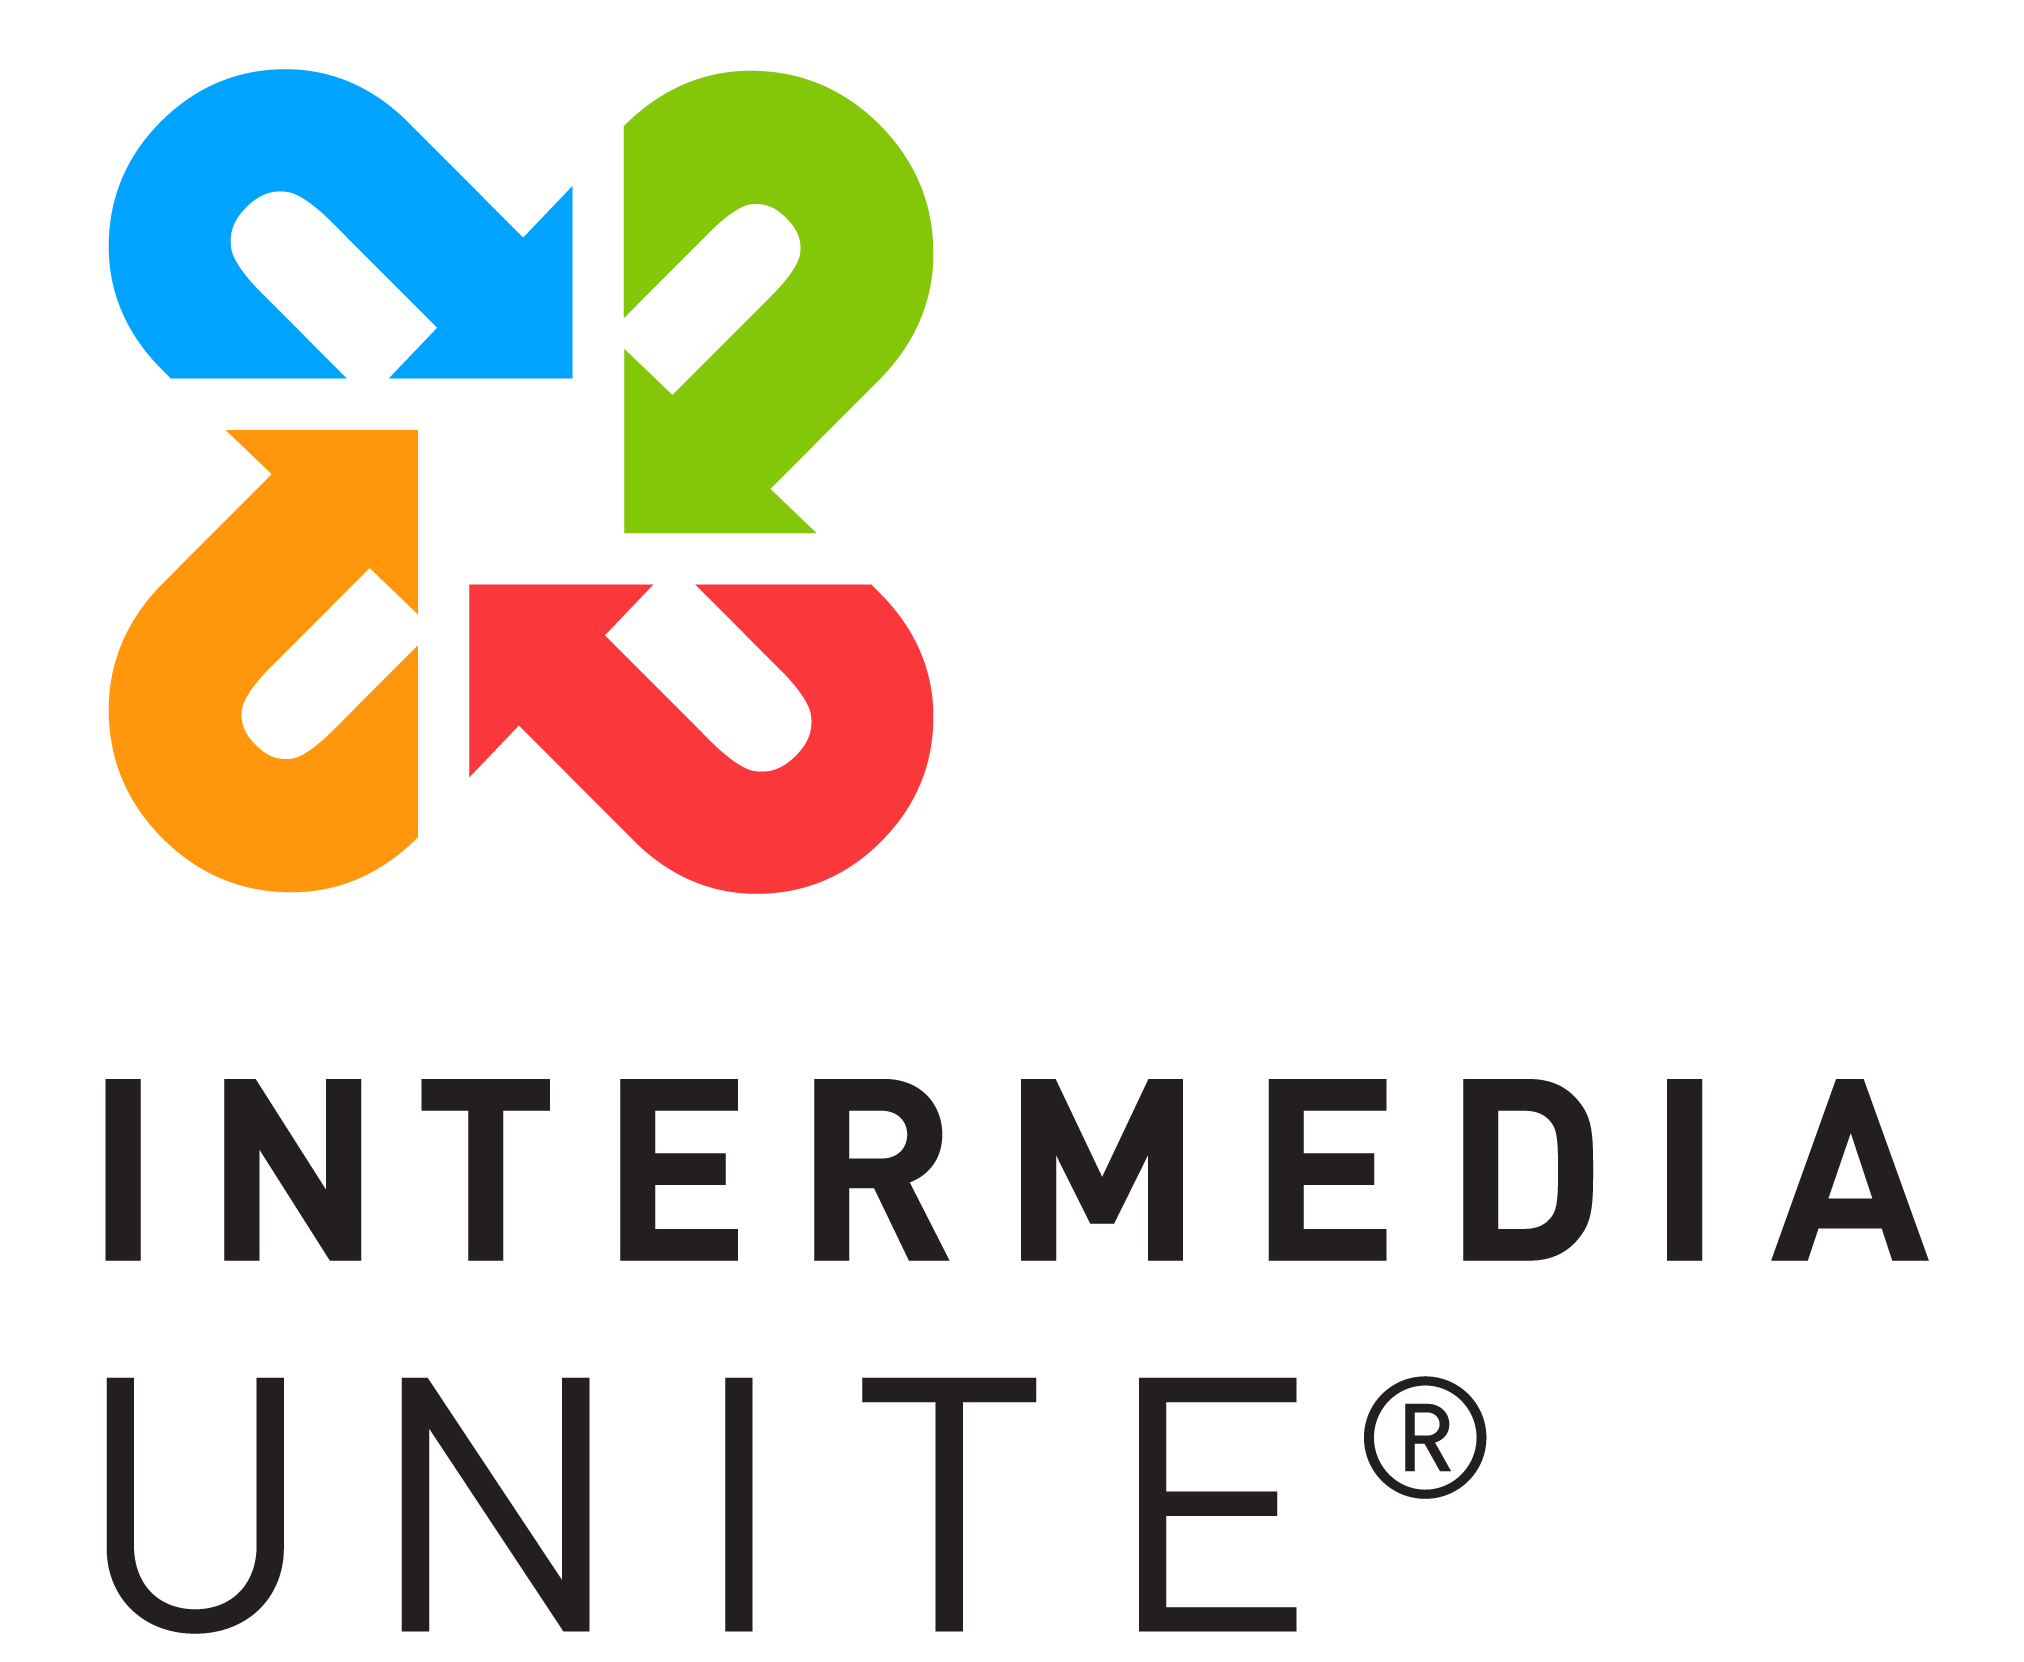 Intermedia Unite Logo